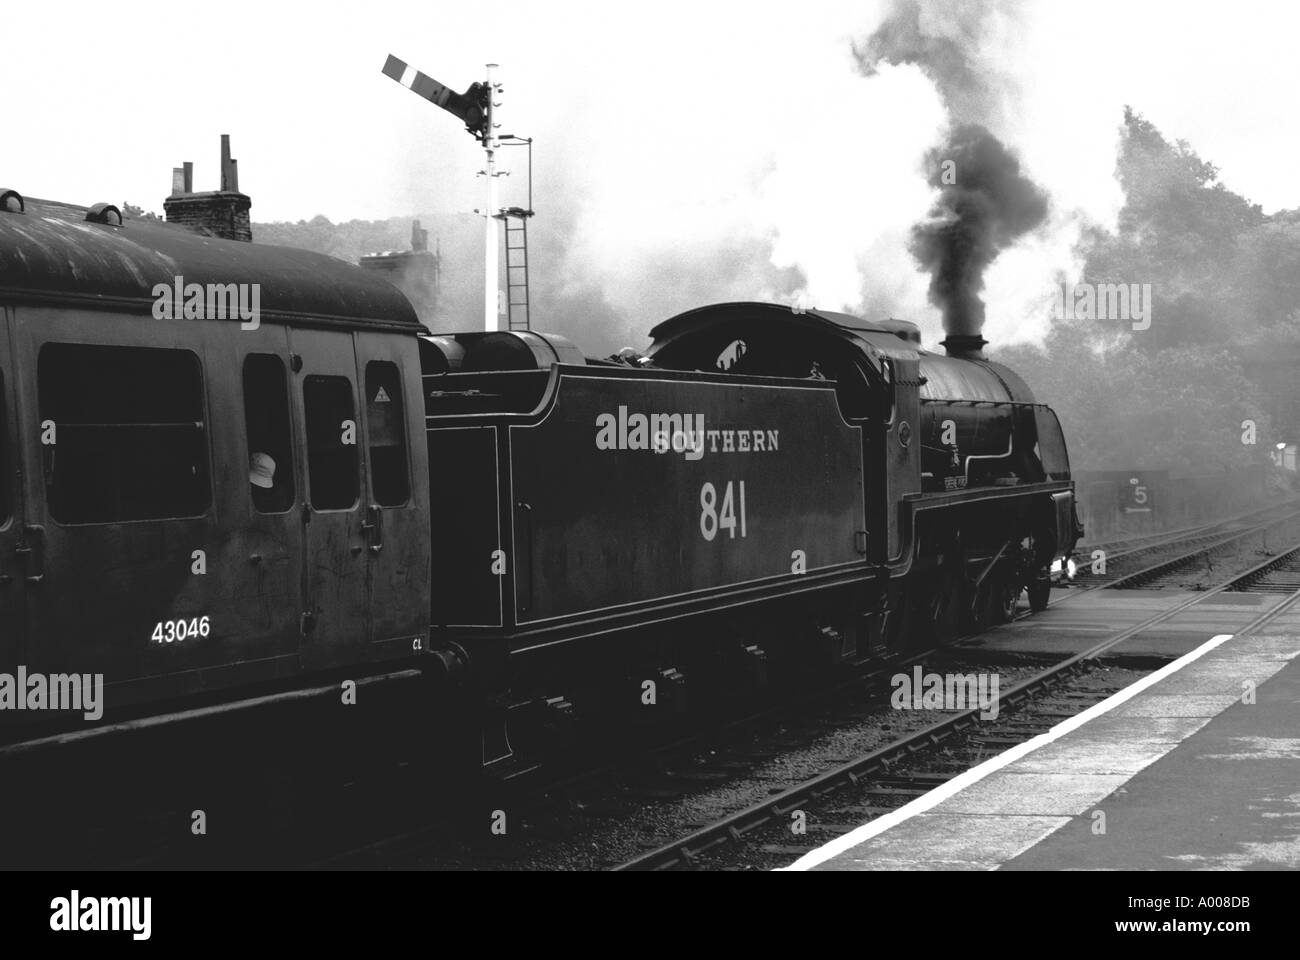 Steam engine train UK Stock Photo - Alamy